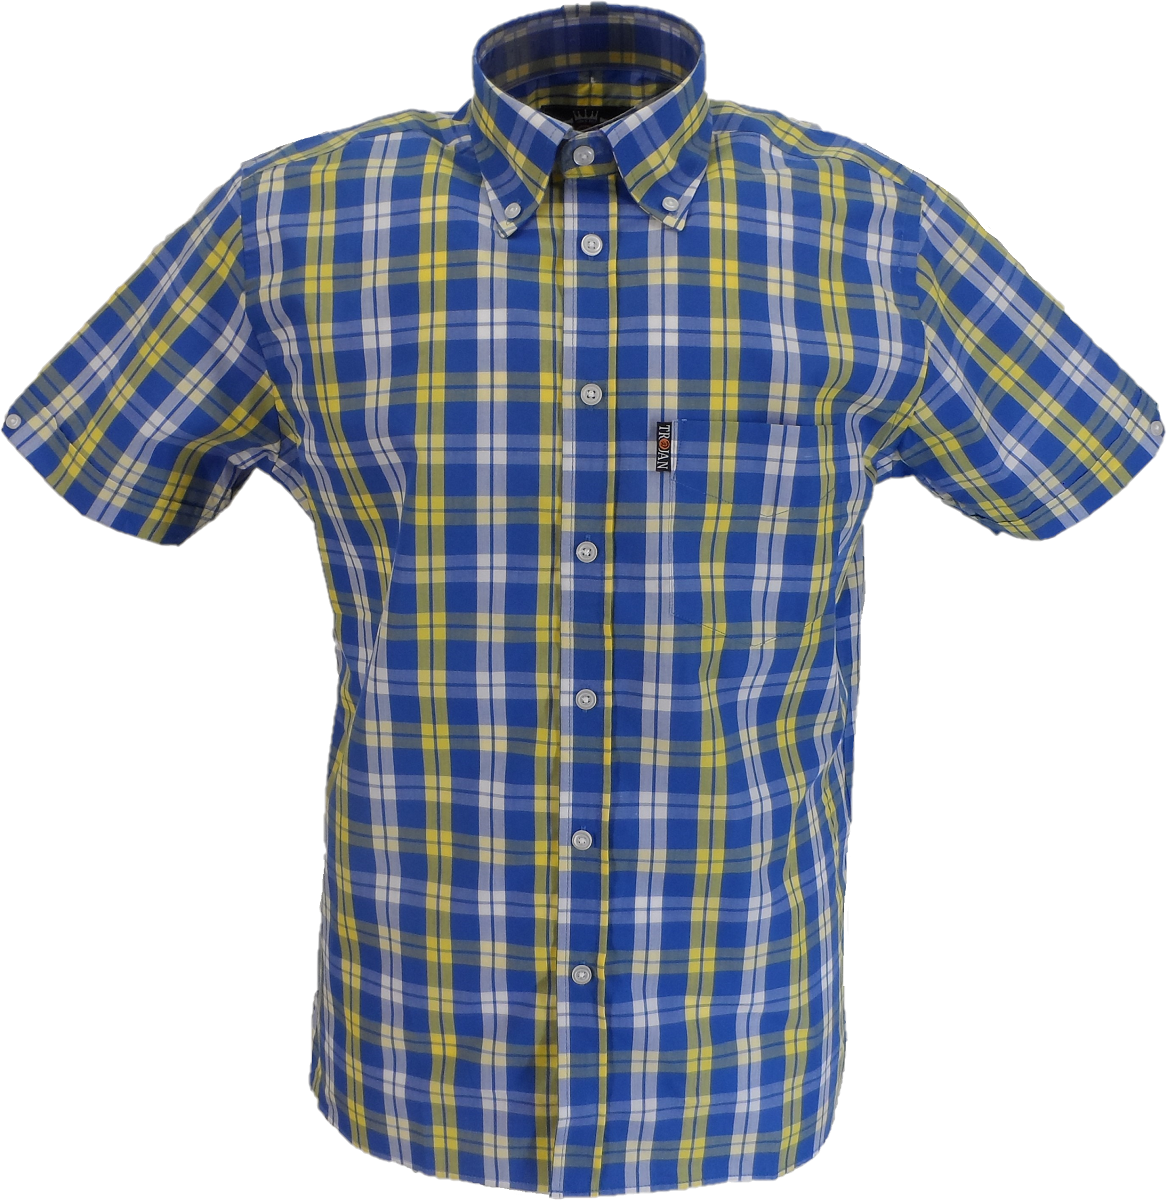 Trojan Mens Cobalt Blue Check 100% Cotton Short Sleeved Shirts and Pocket Square